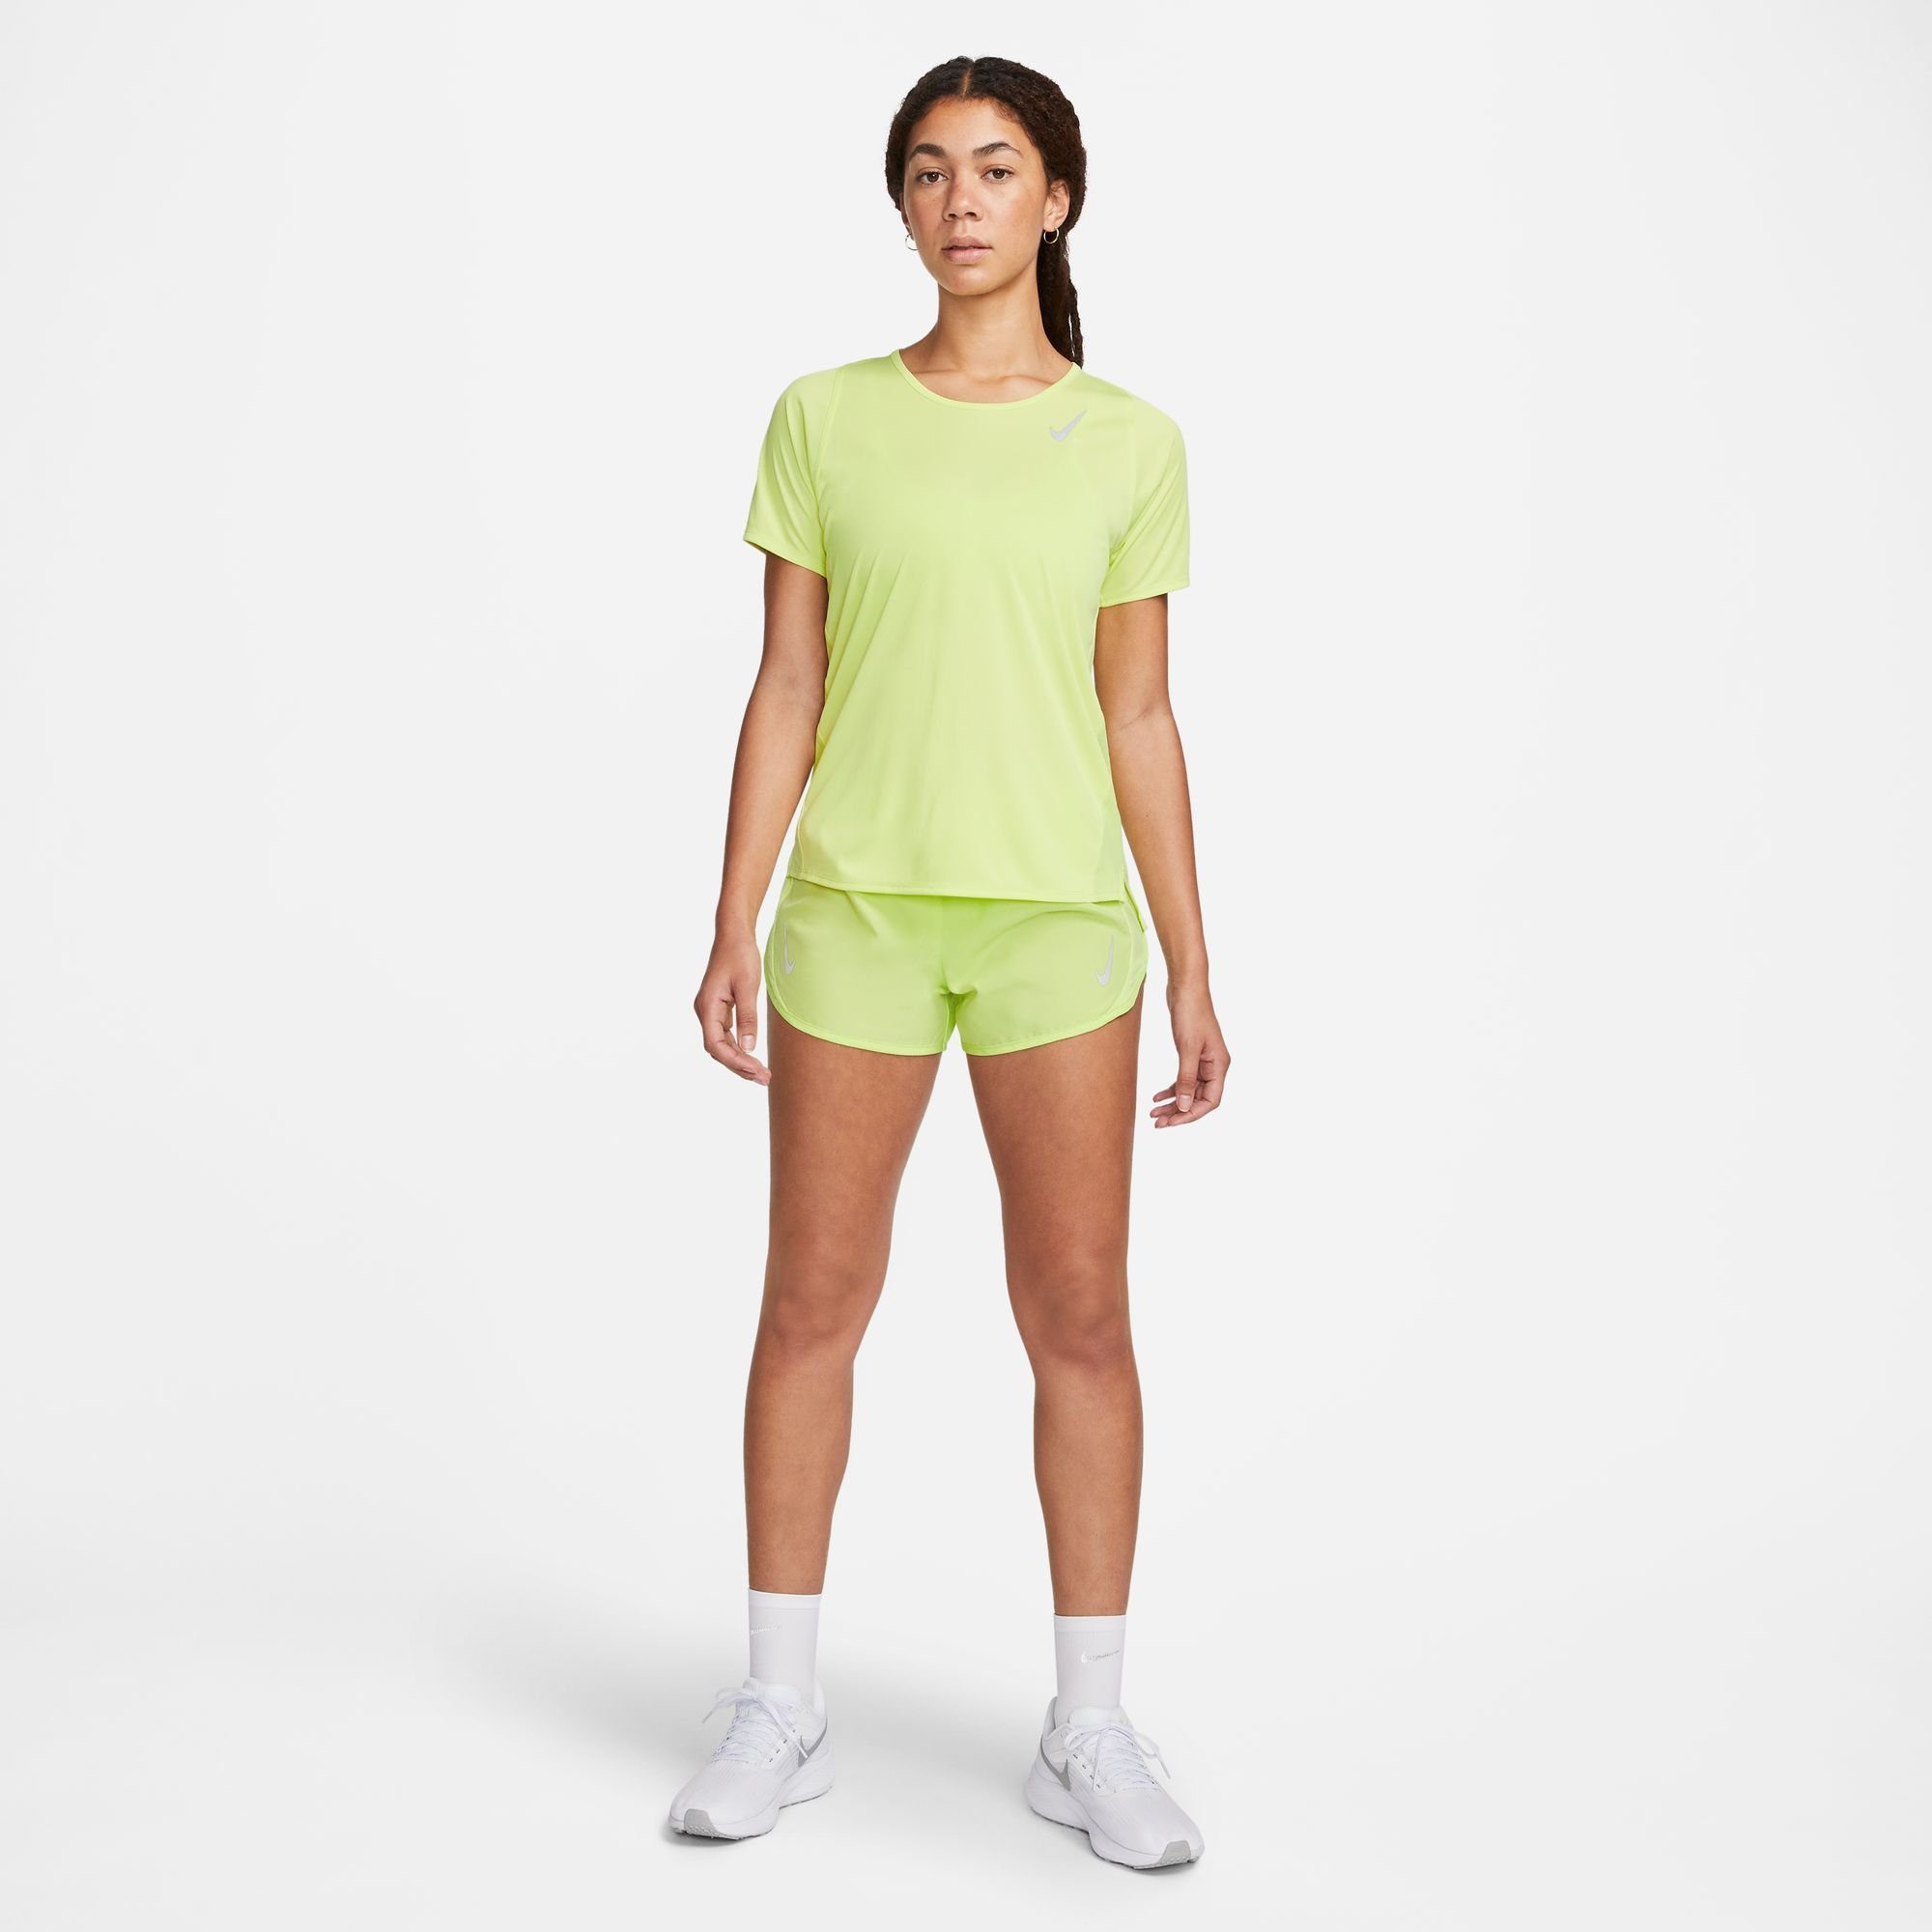 Nike DRI-FIT Laufshirt RACE SILV LEMON TWIST/REFLECTIVE WOMEN'S TOP RUNNING LT SHORT-SLEEVE